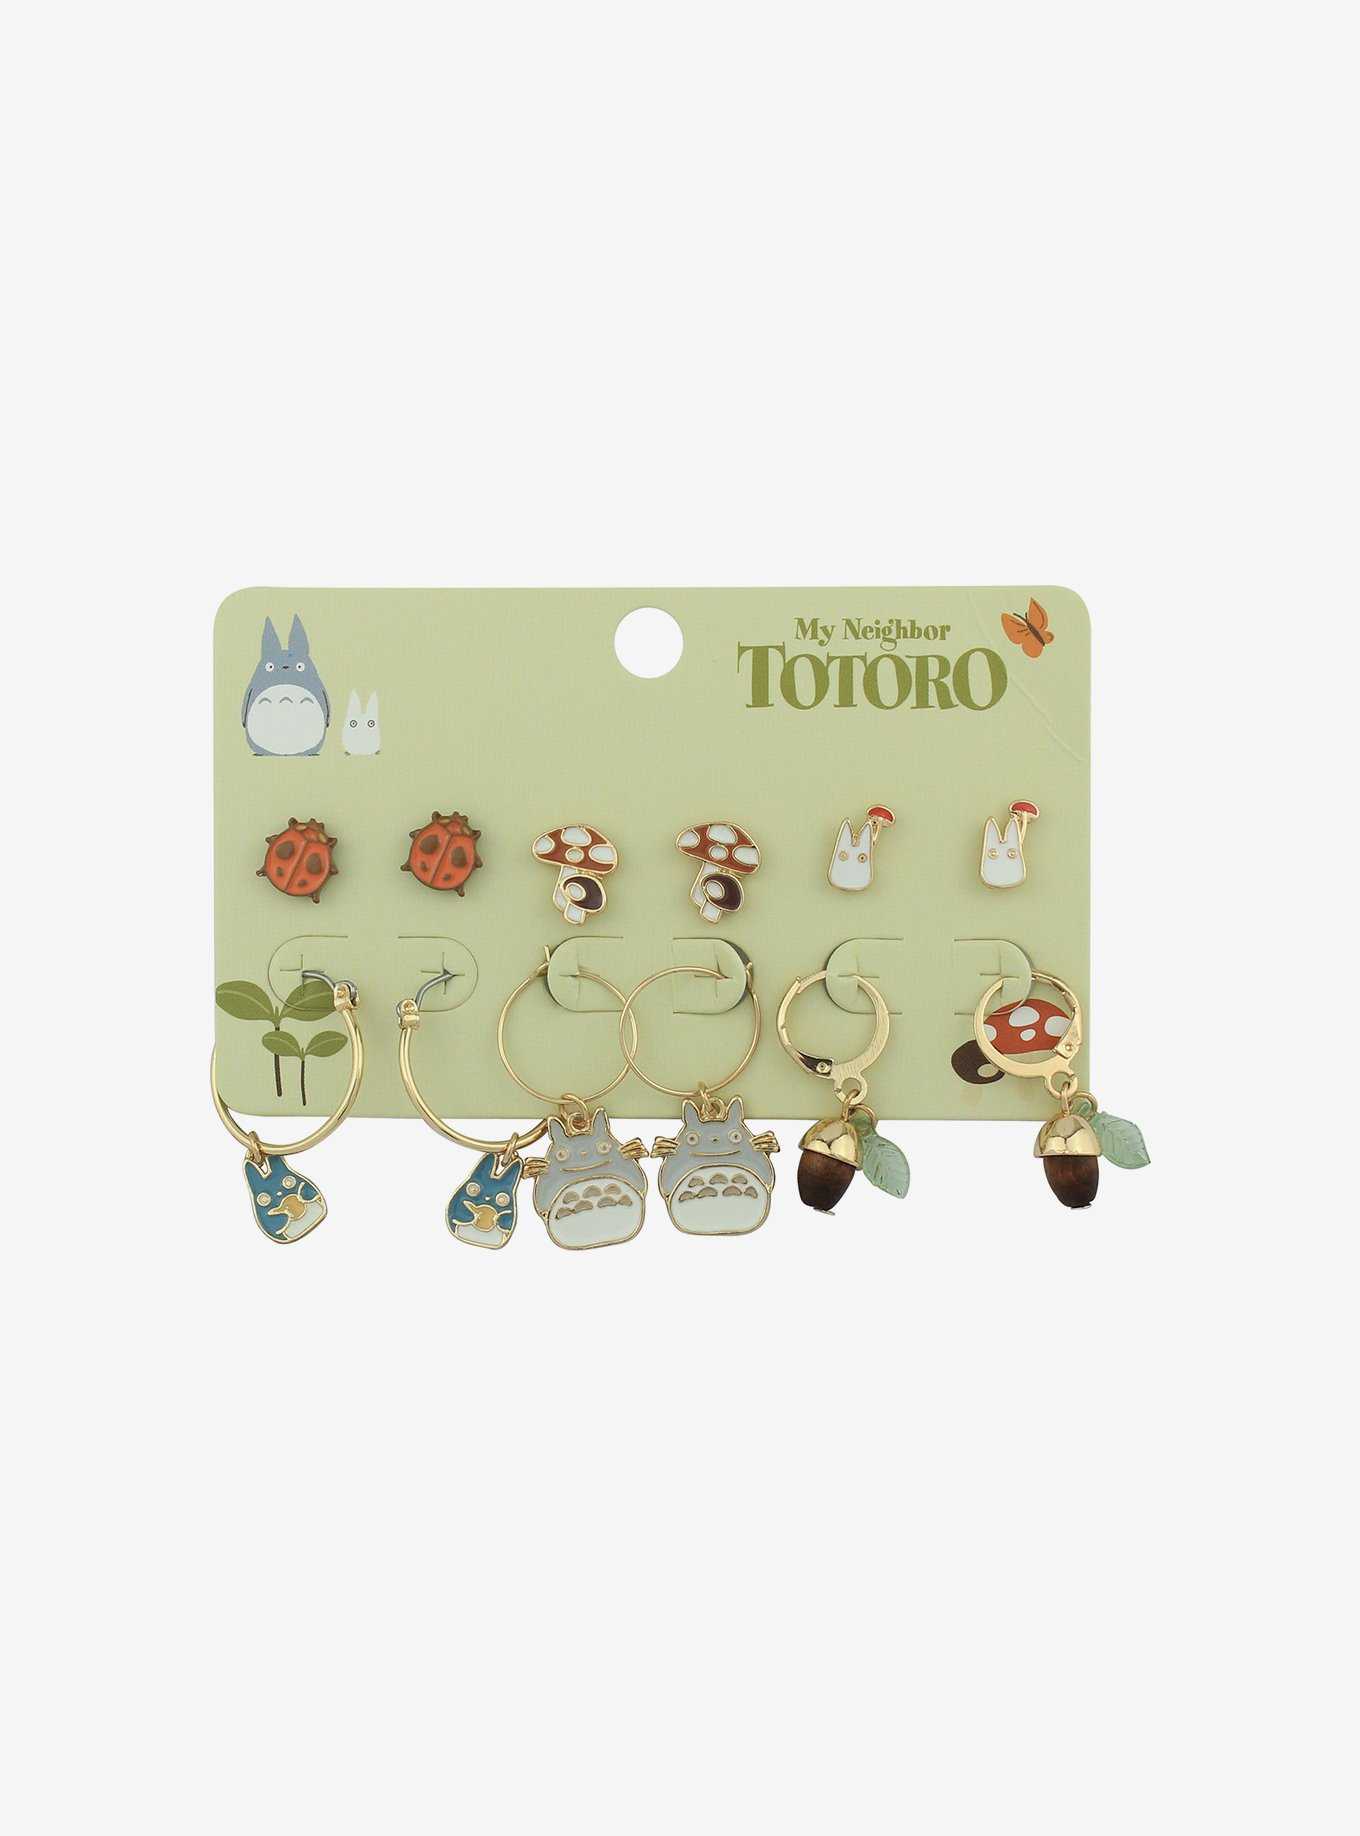 Hot Topic Studio Ghibli Princess Mononoke Kodama Drop Earrings